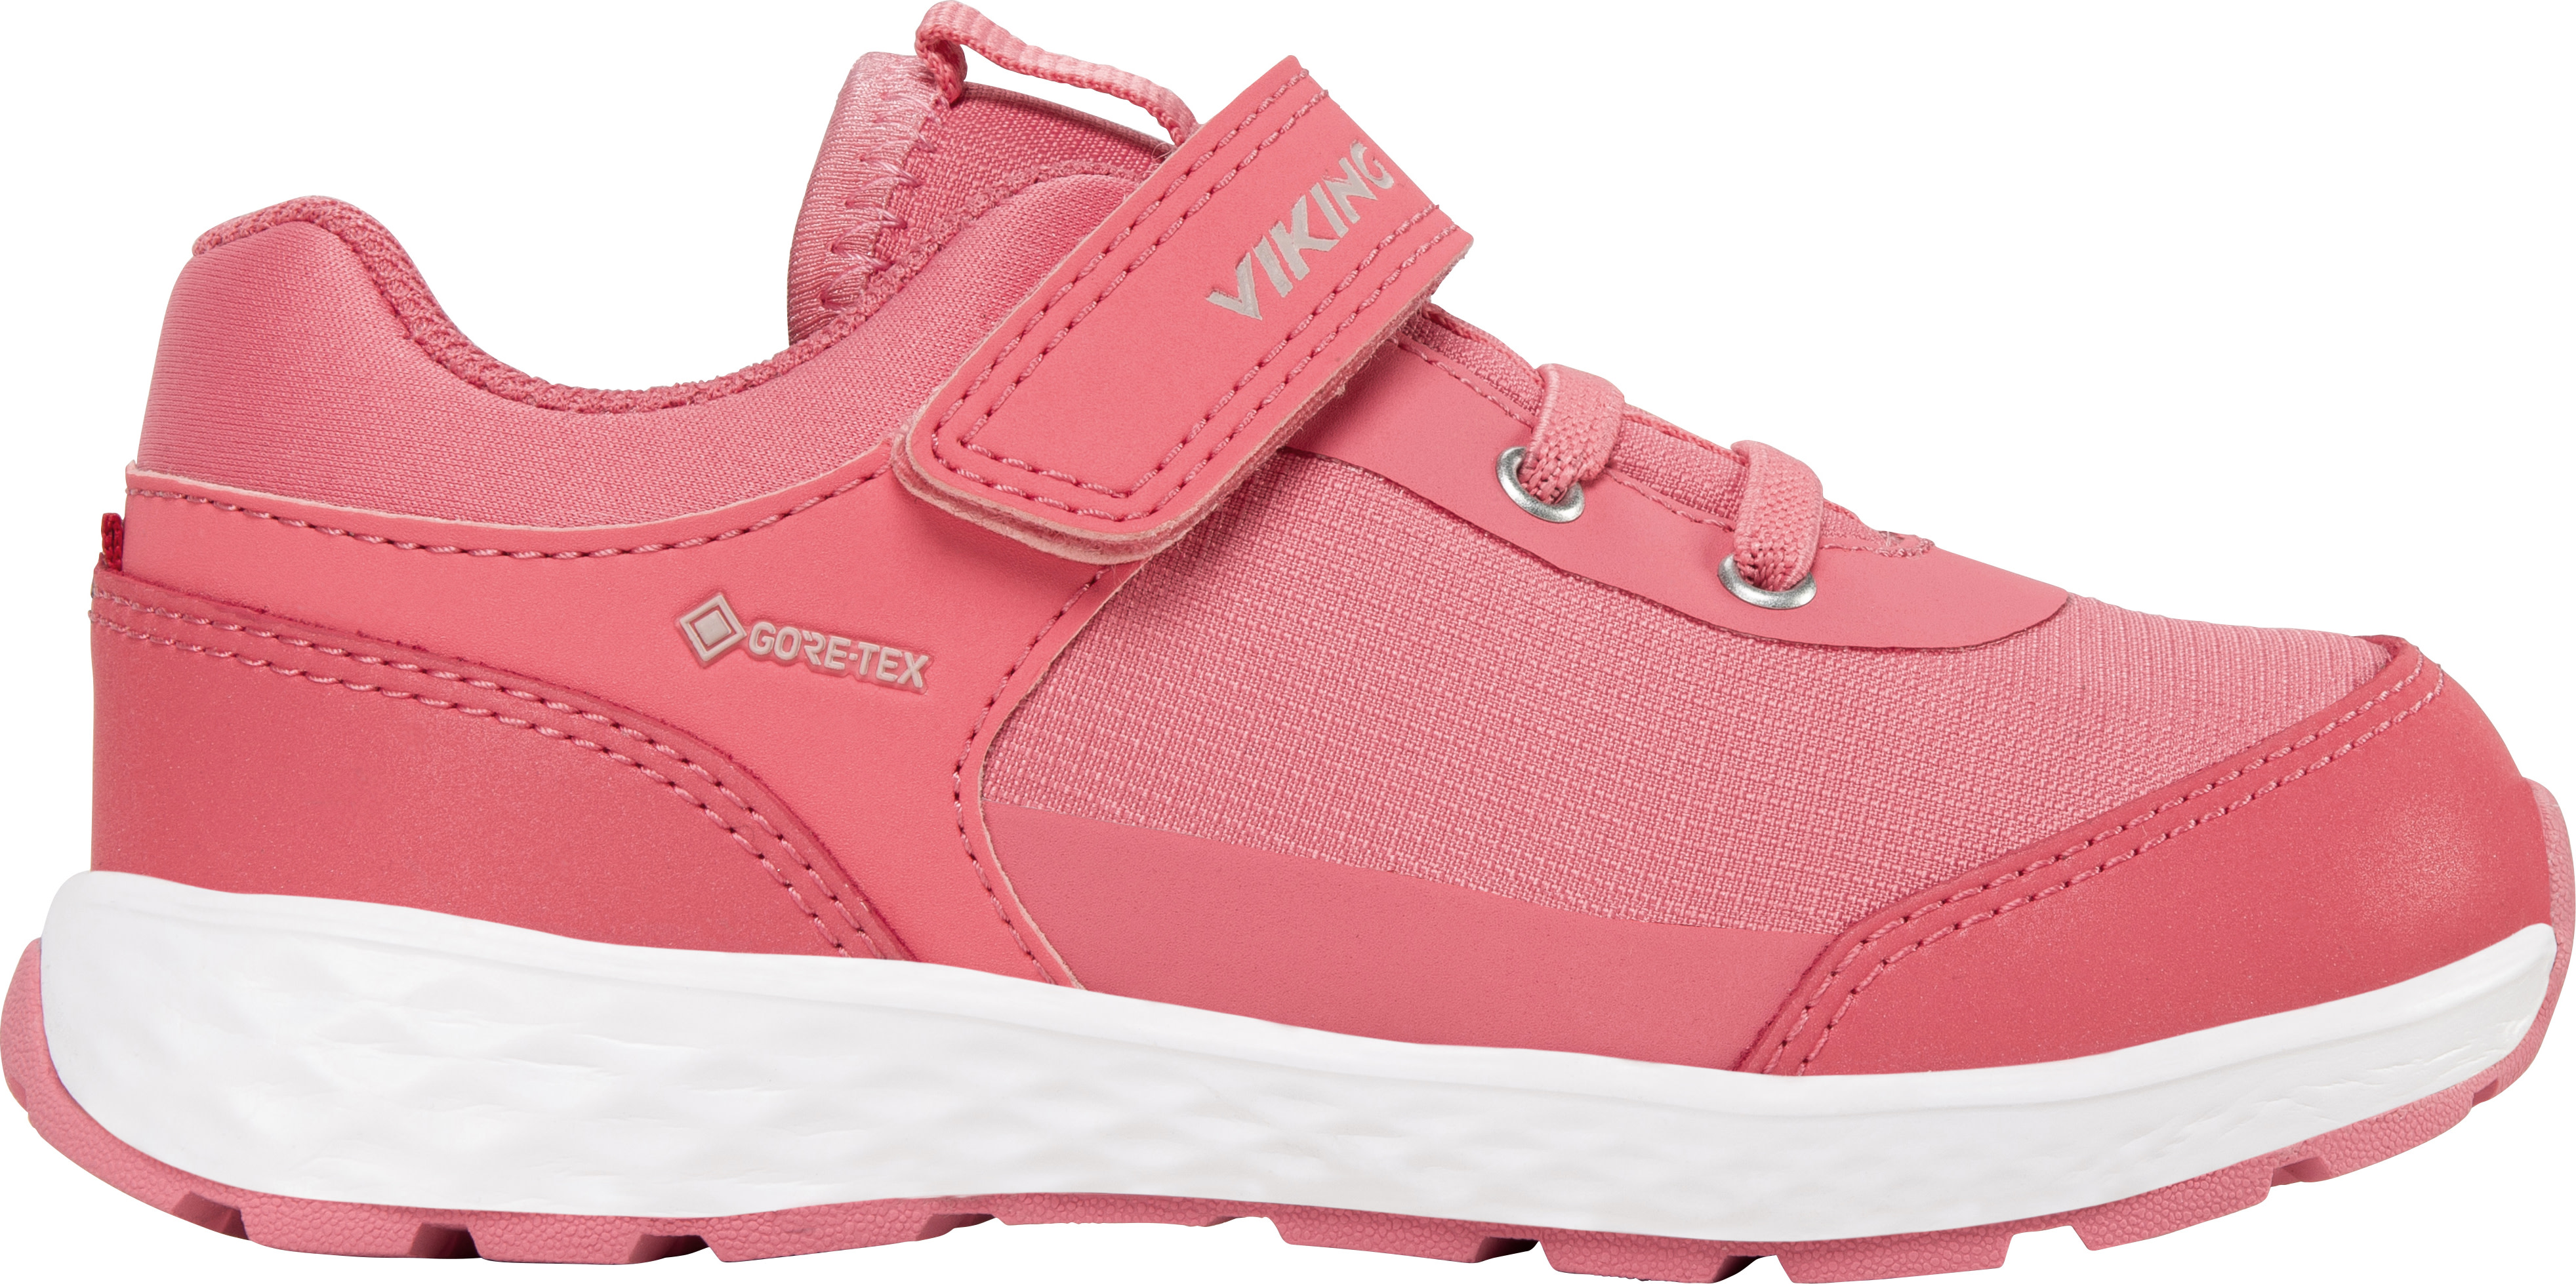 Viking Footwear Kids’ Spectrum R Gore-Tex Pink/Pink